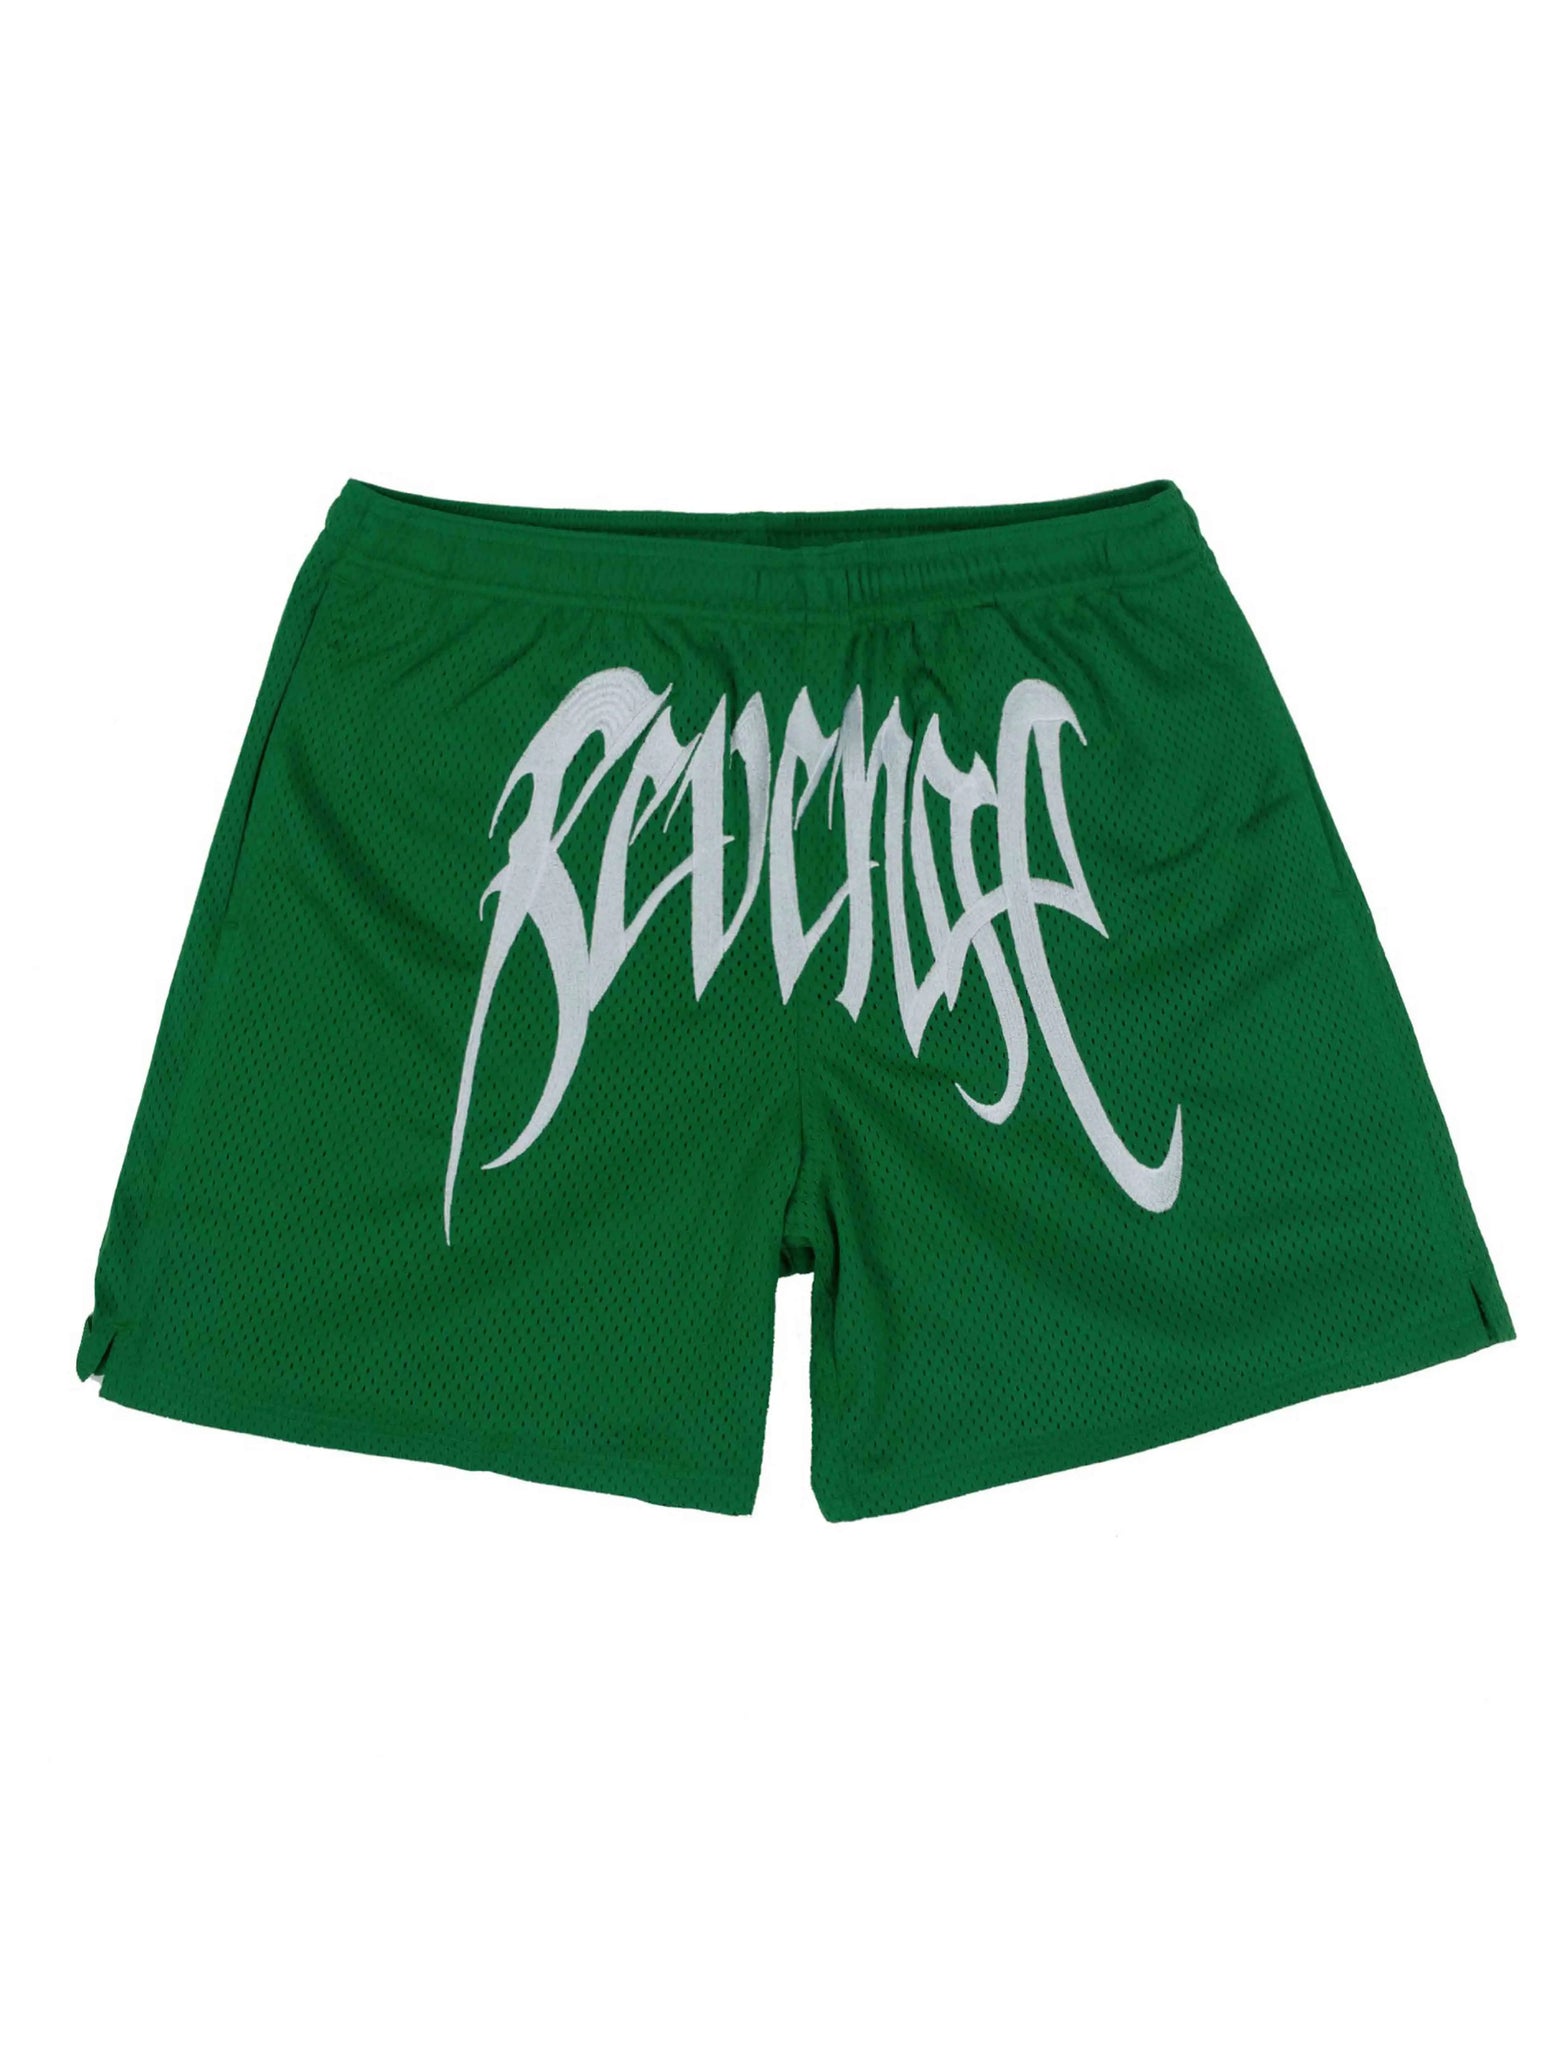 Revenge Mesh Embroidered Shorts Green [FW21] Prior